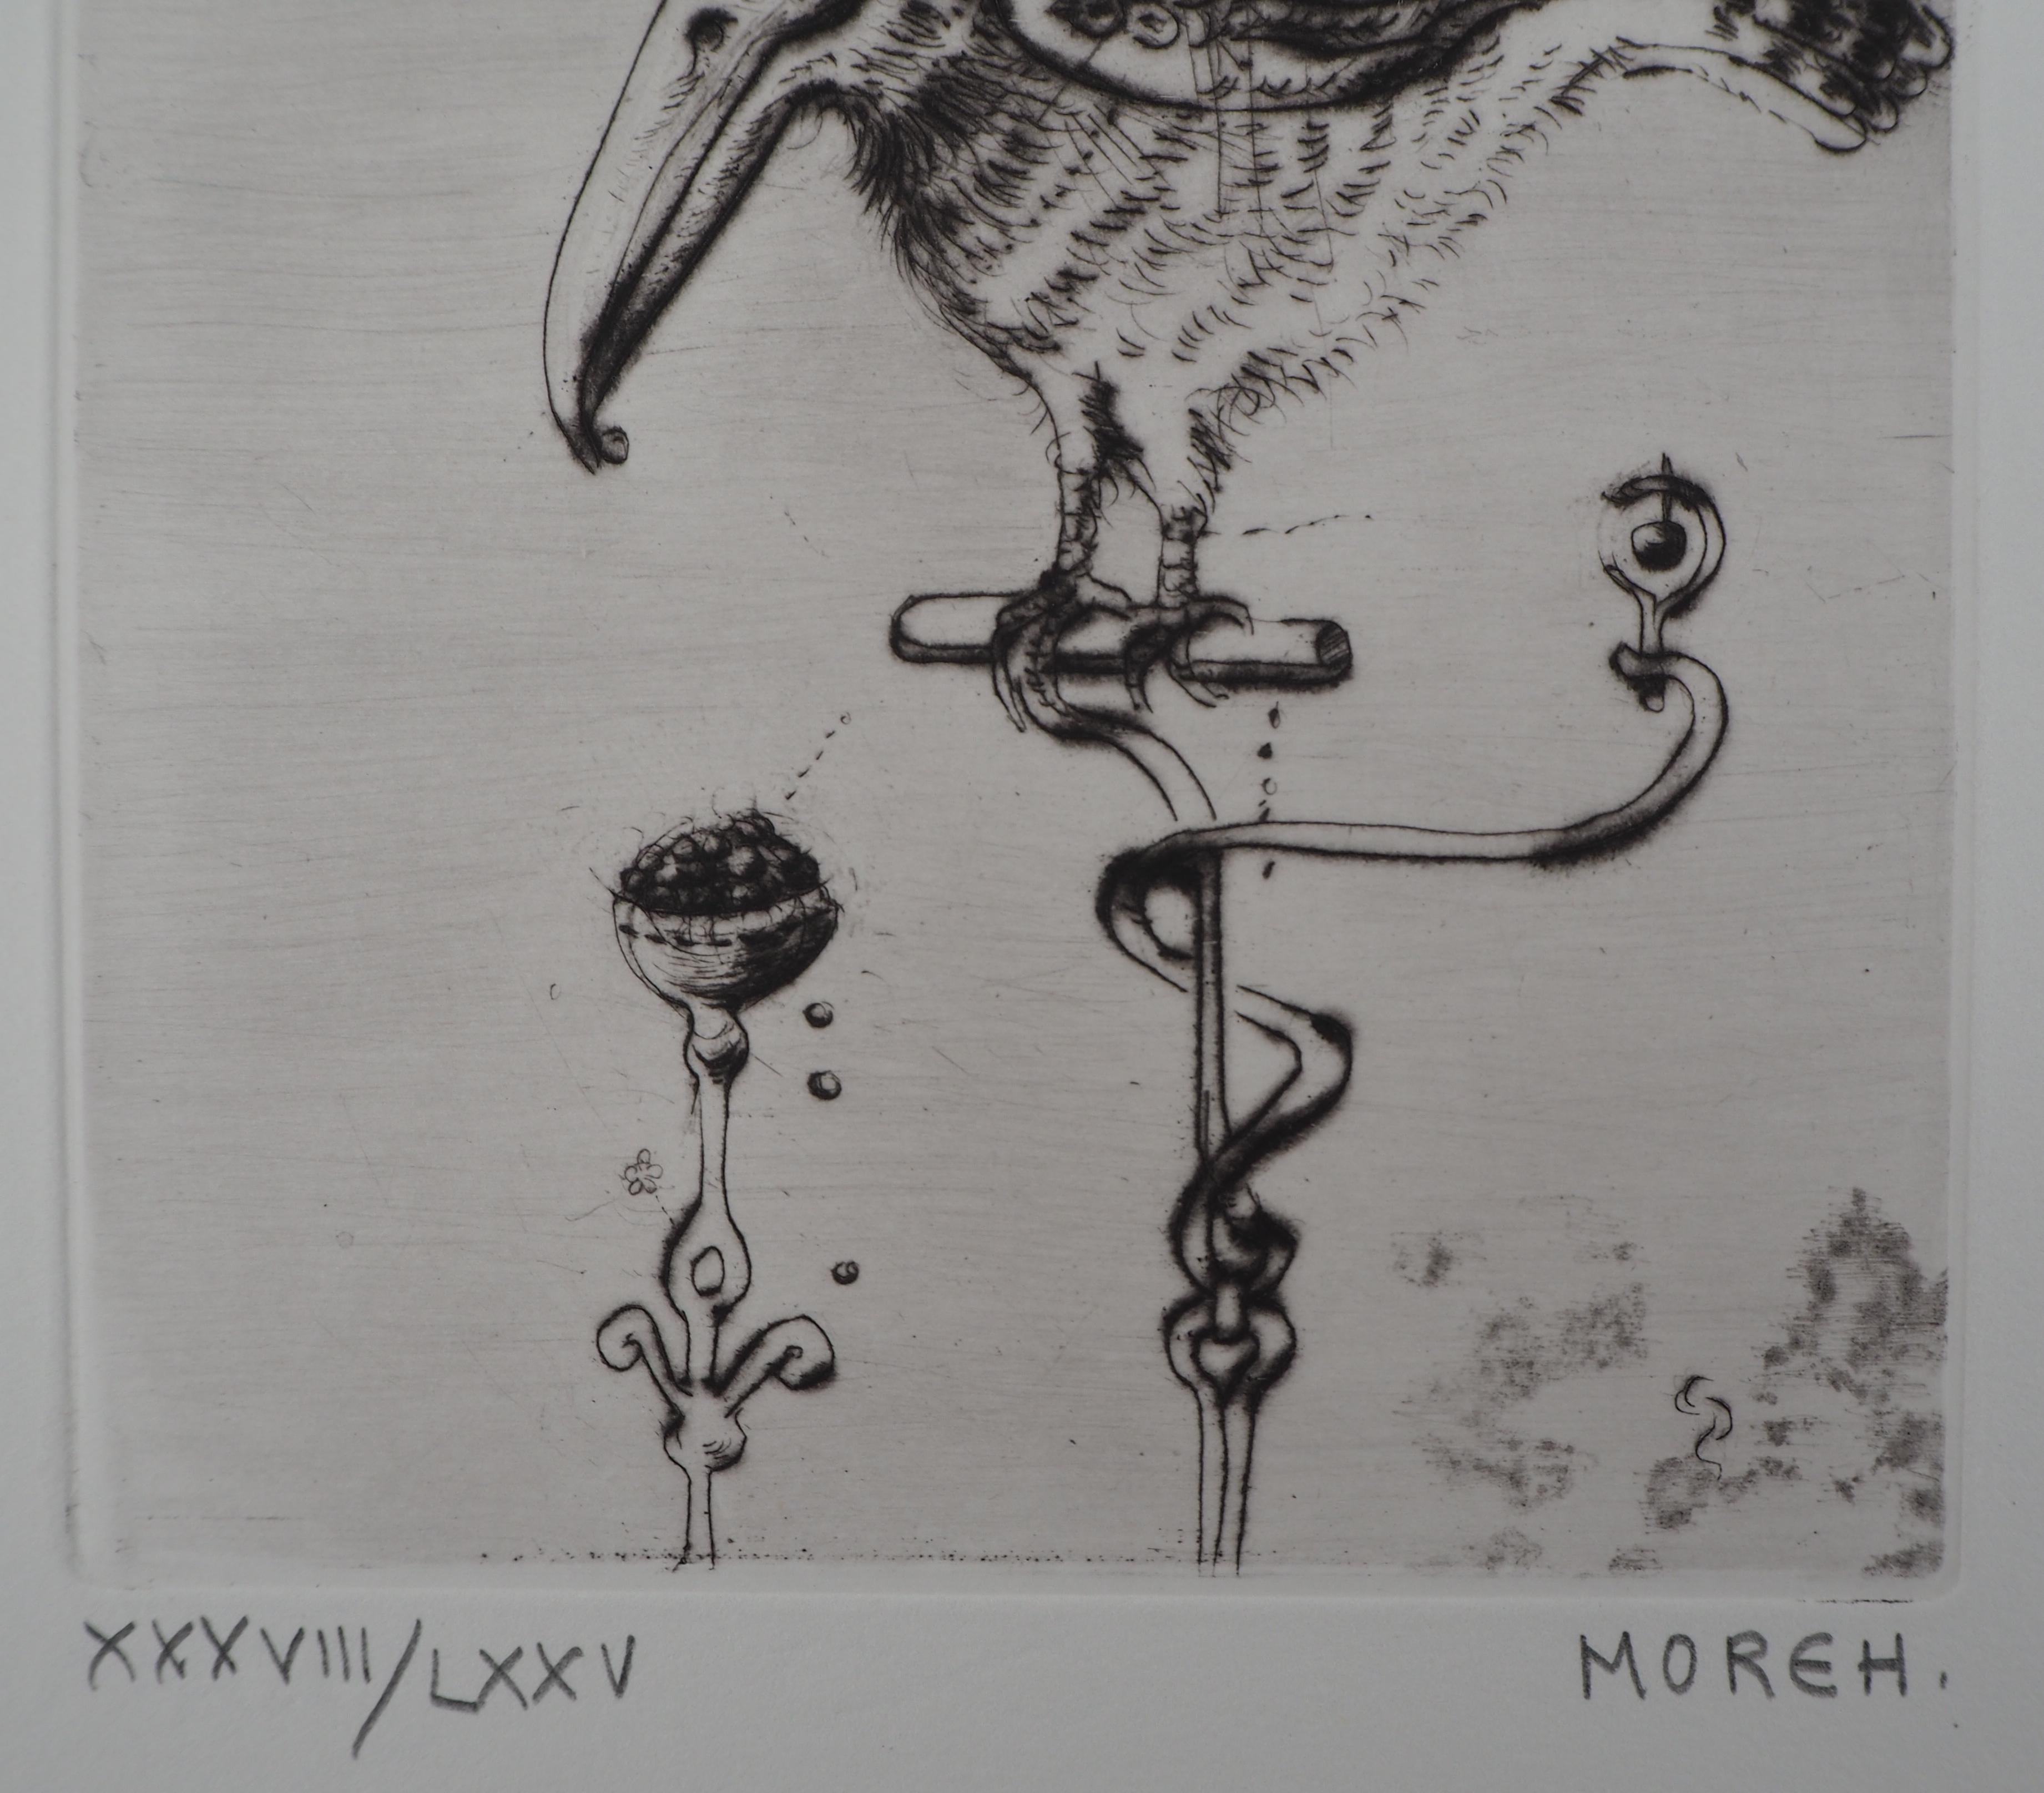 The Little Bird - Original Etching Handsigned, Ltd 75 copies - Modern Print by Mordecai Moreh